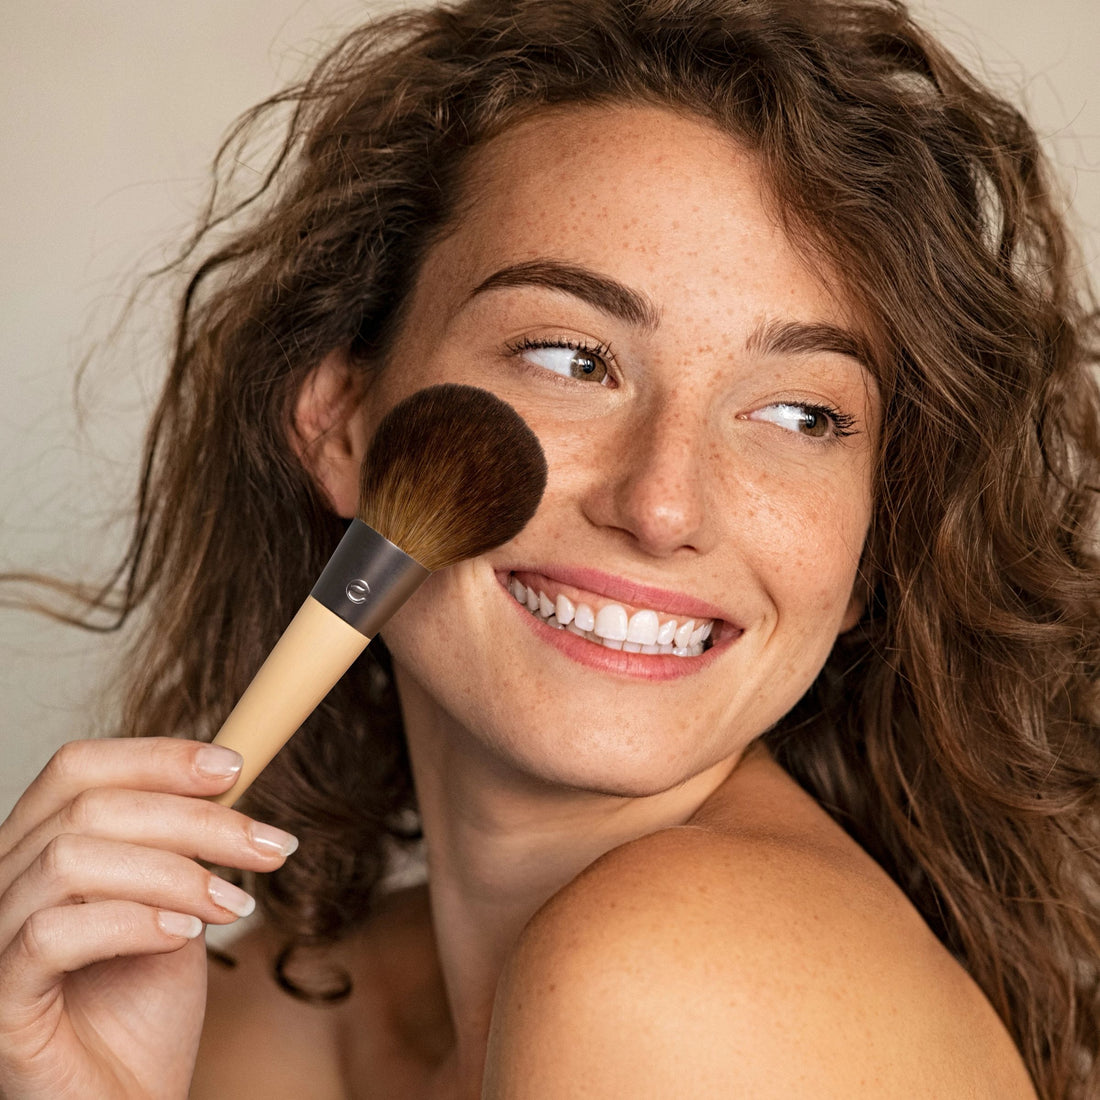 EcoTools Flawless Finish Powder Makeup Brush, For Powdered Blush